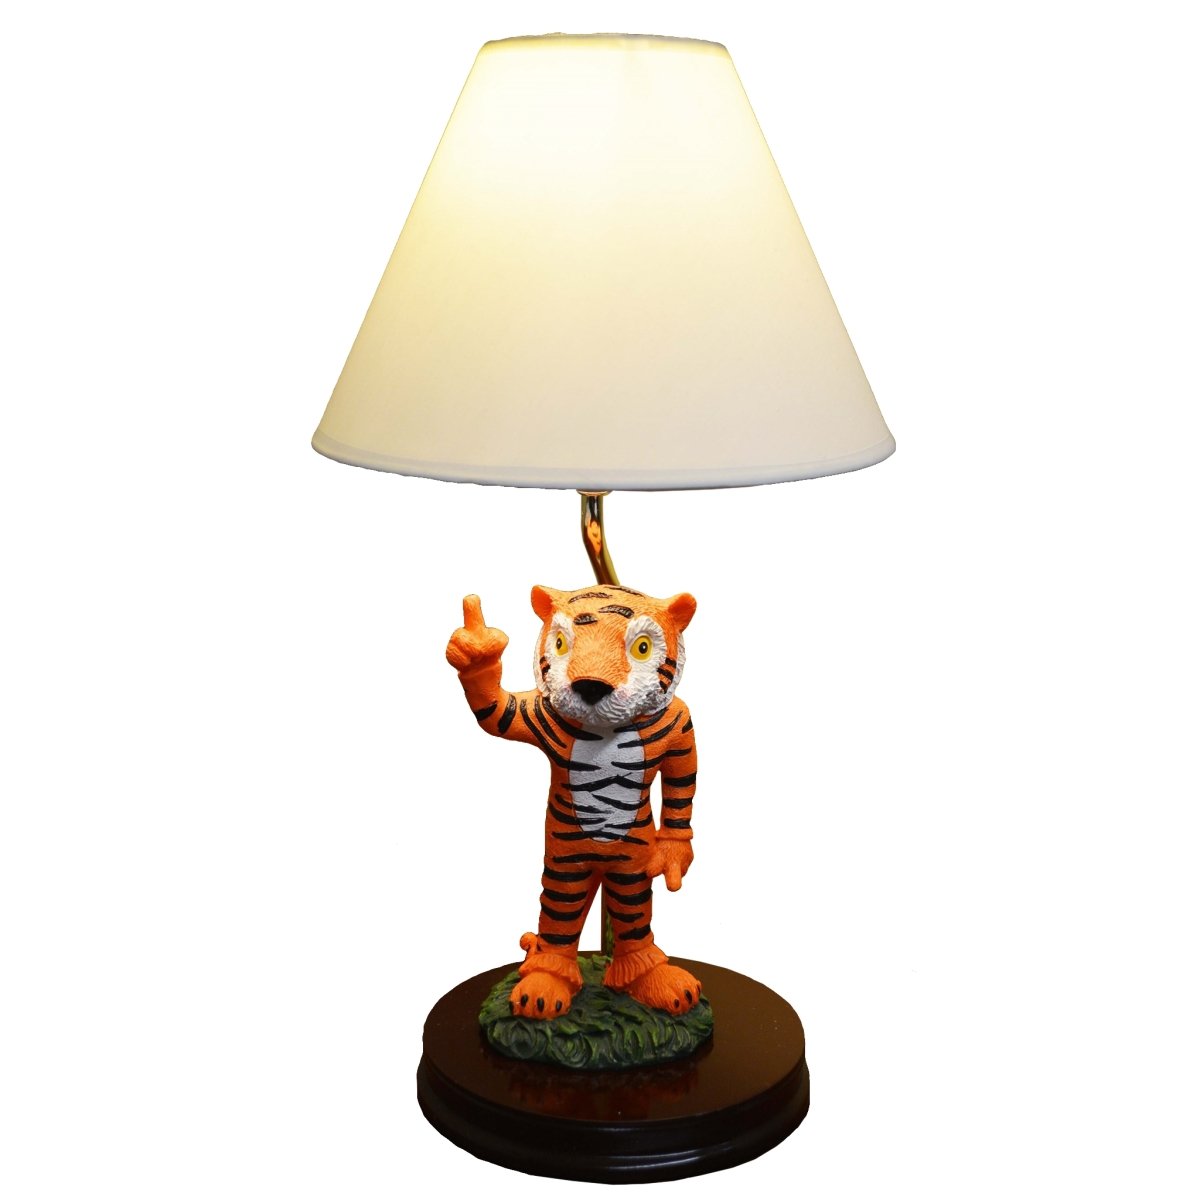 17.5" Resin Painted Mascot Lamp - Mr. Knickerbocker